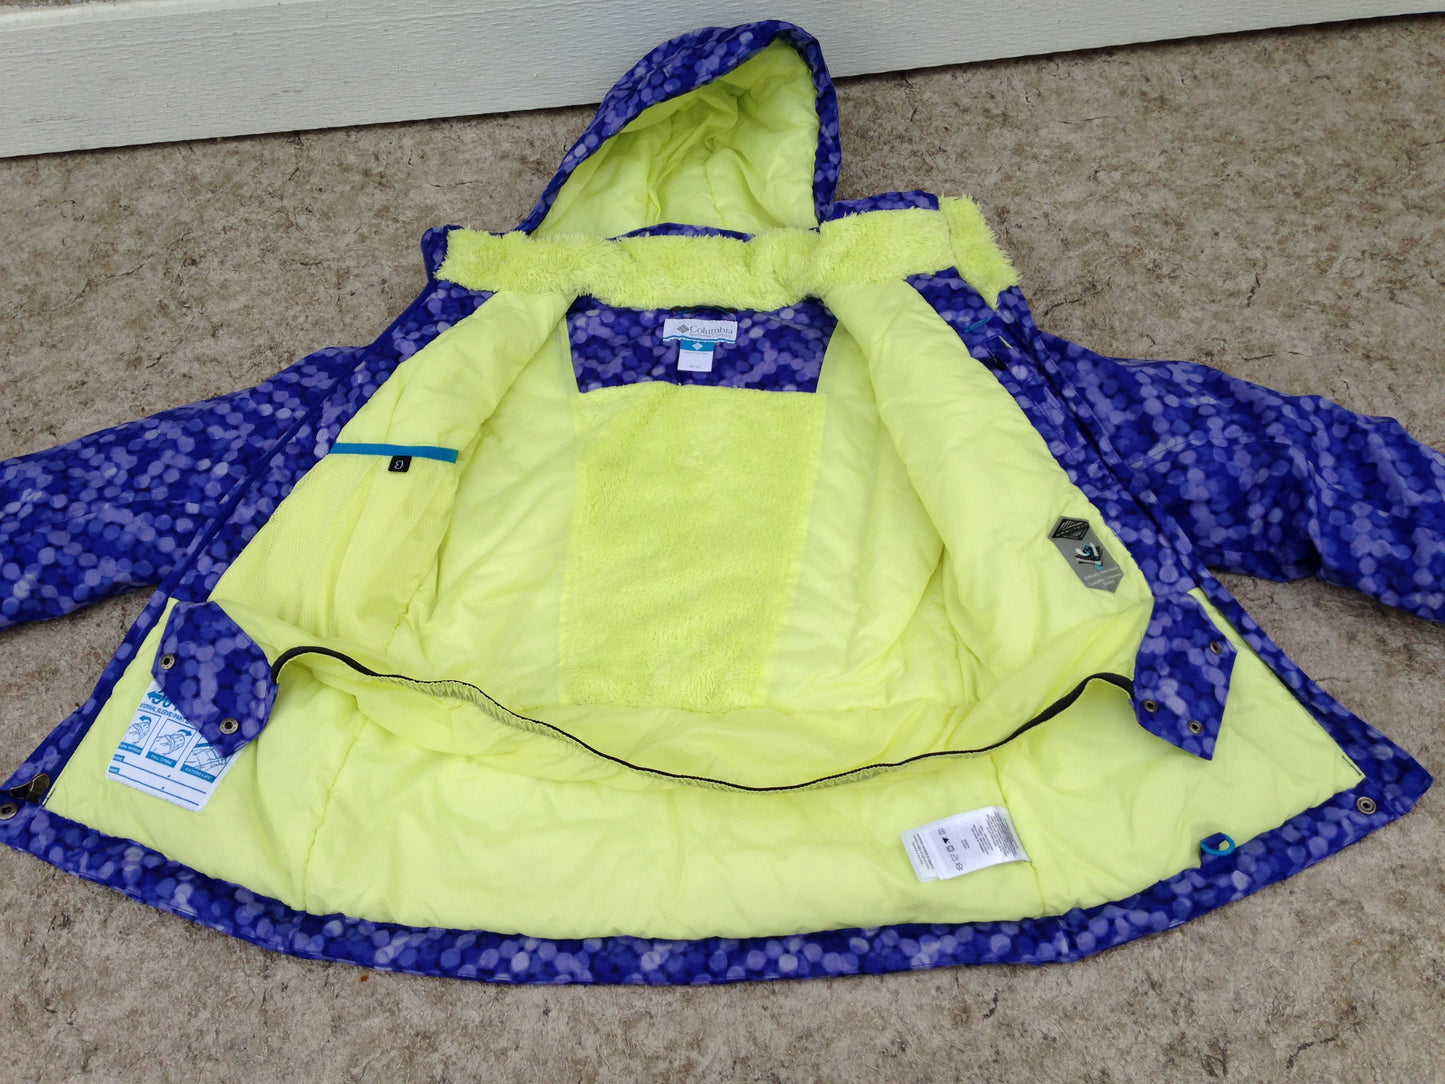 Winter Coat Child Size 10-12 Columbia Purple Yellow With Snow Belt Snowboarding New Demo Model